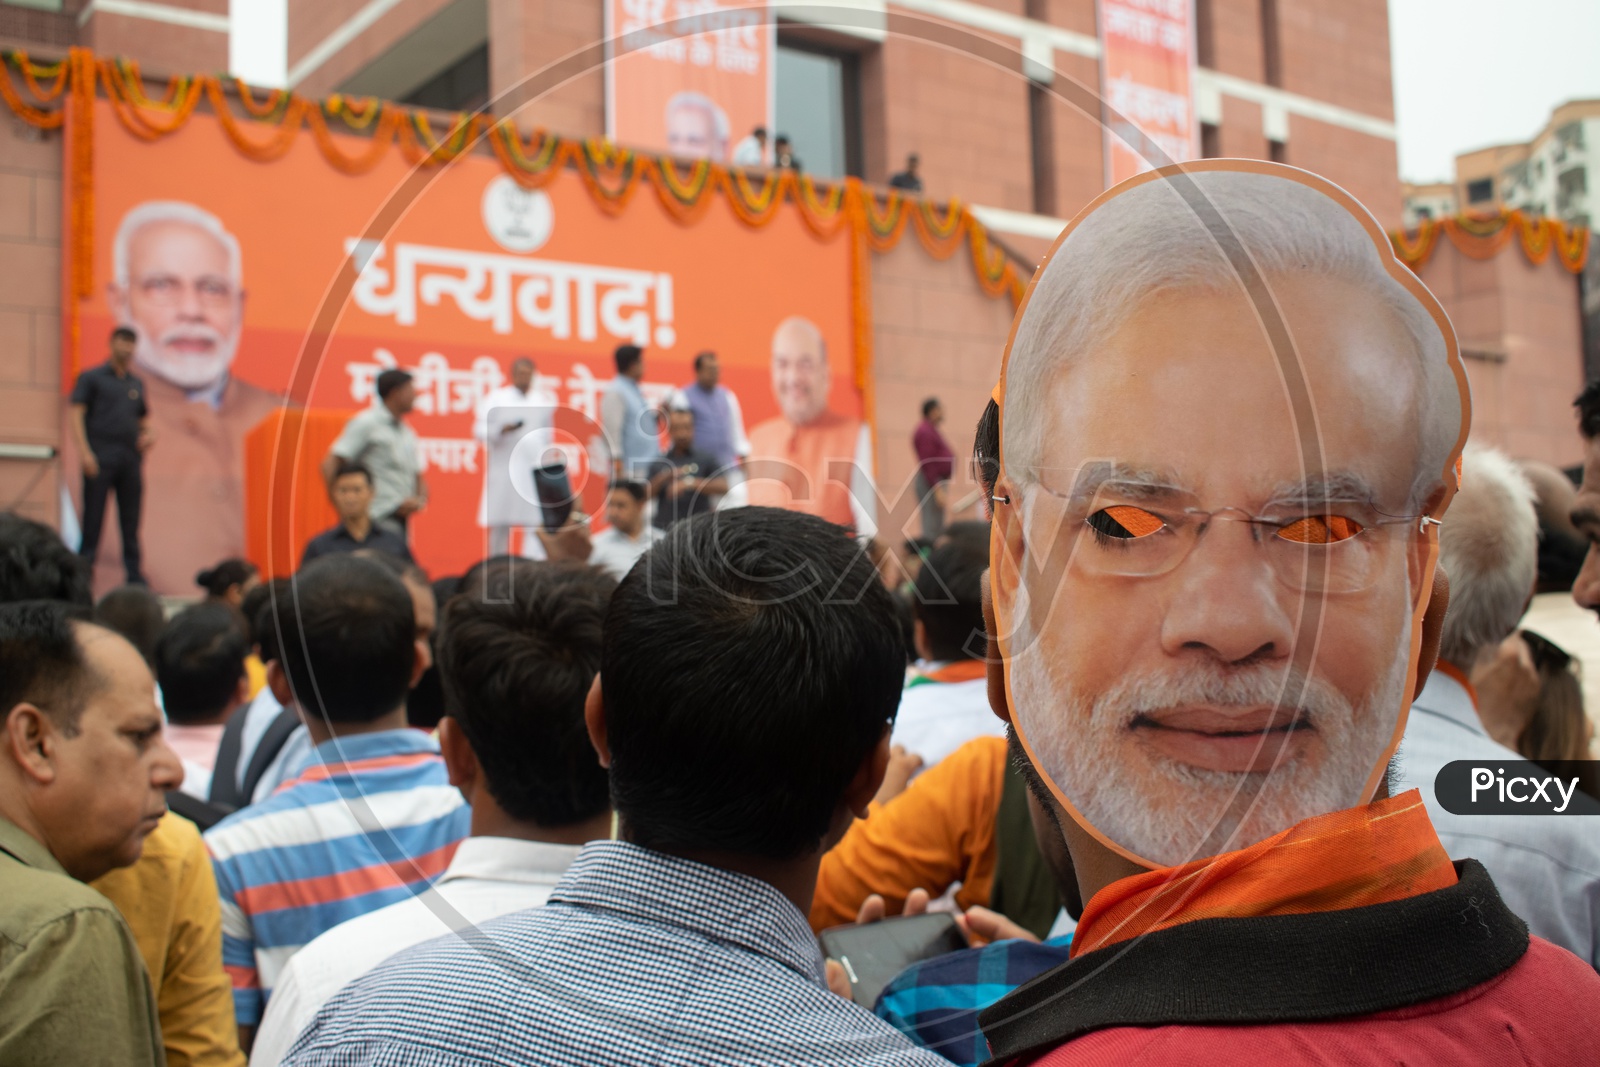 A man wearing mask of PM Narendra Modi during victory of Bhartiya Janta Party (BJP) in Lok Sabha election.